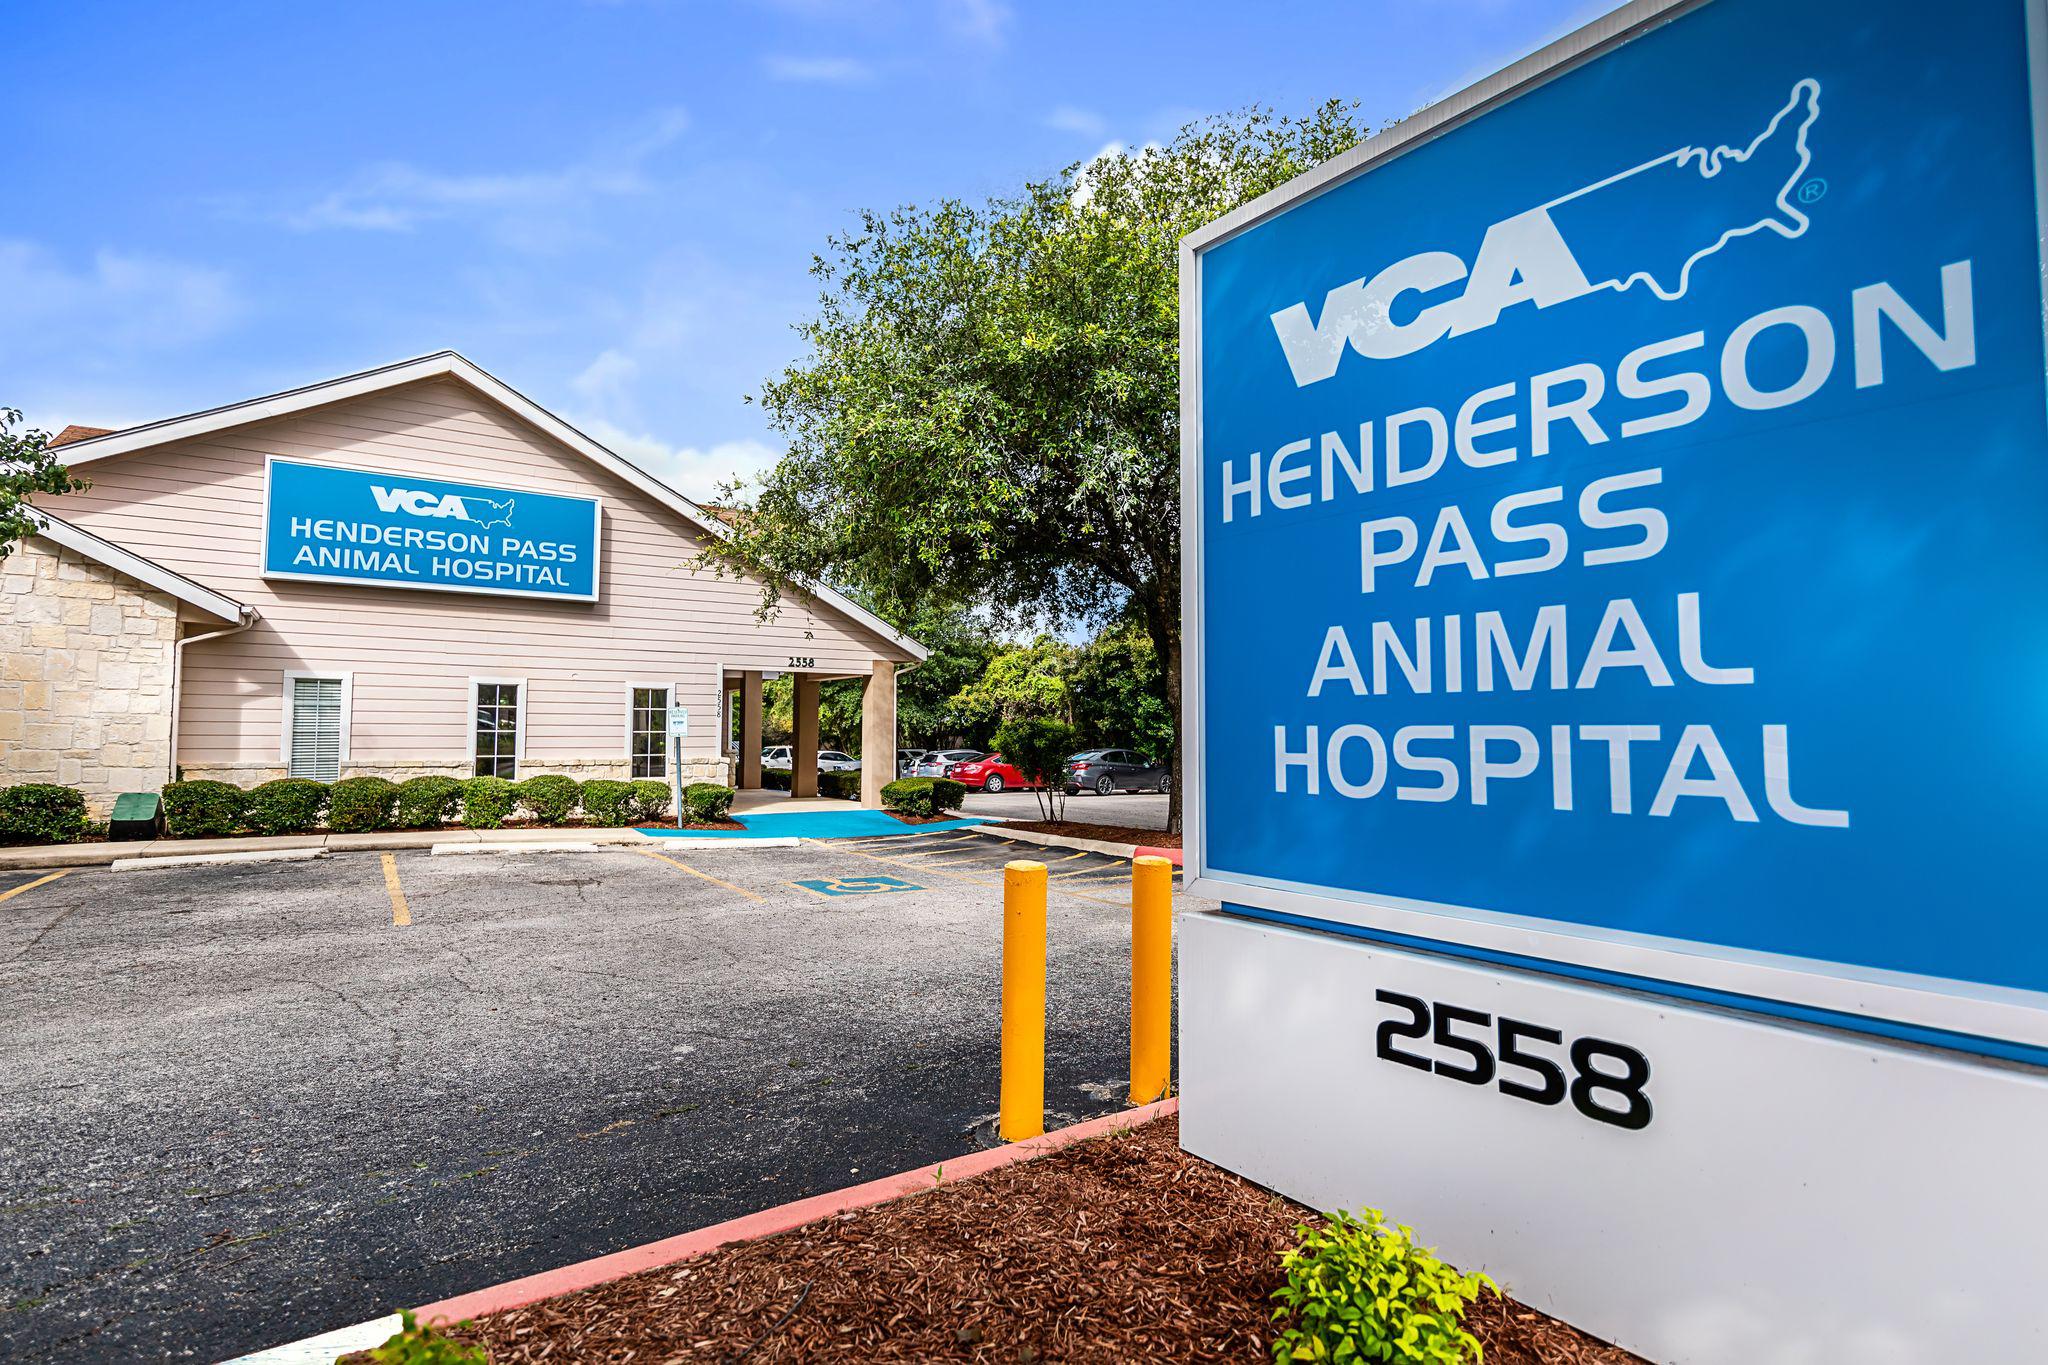 VCA Henderson Pass Animal Hospital Photo